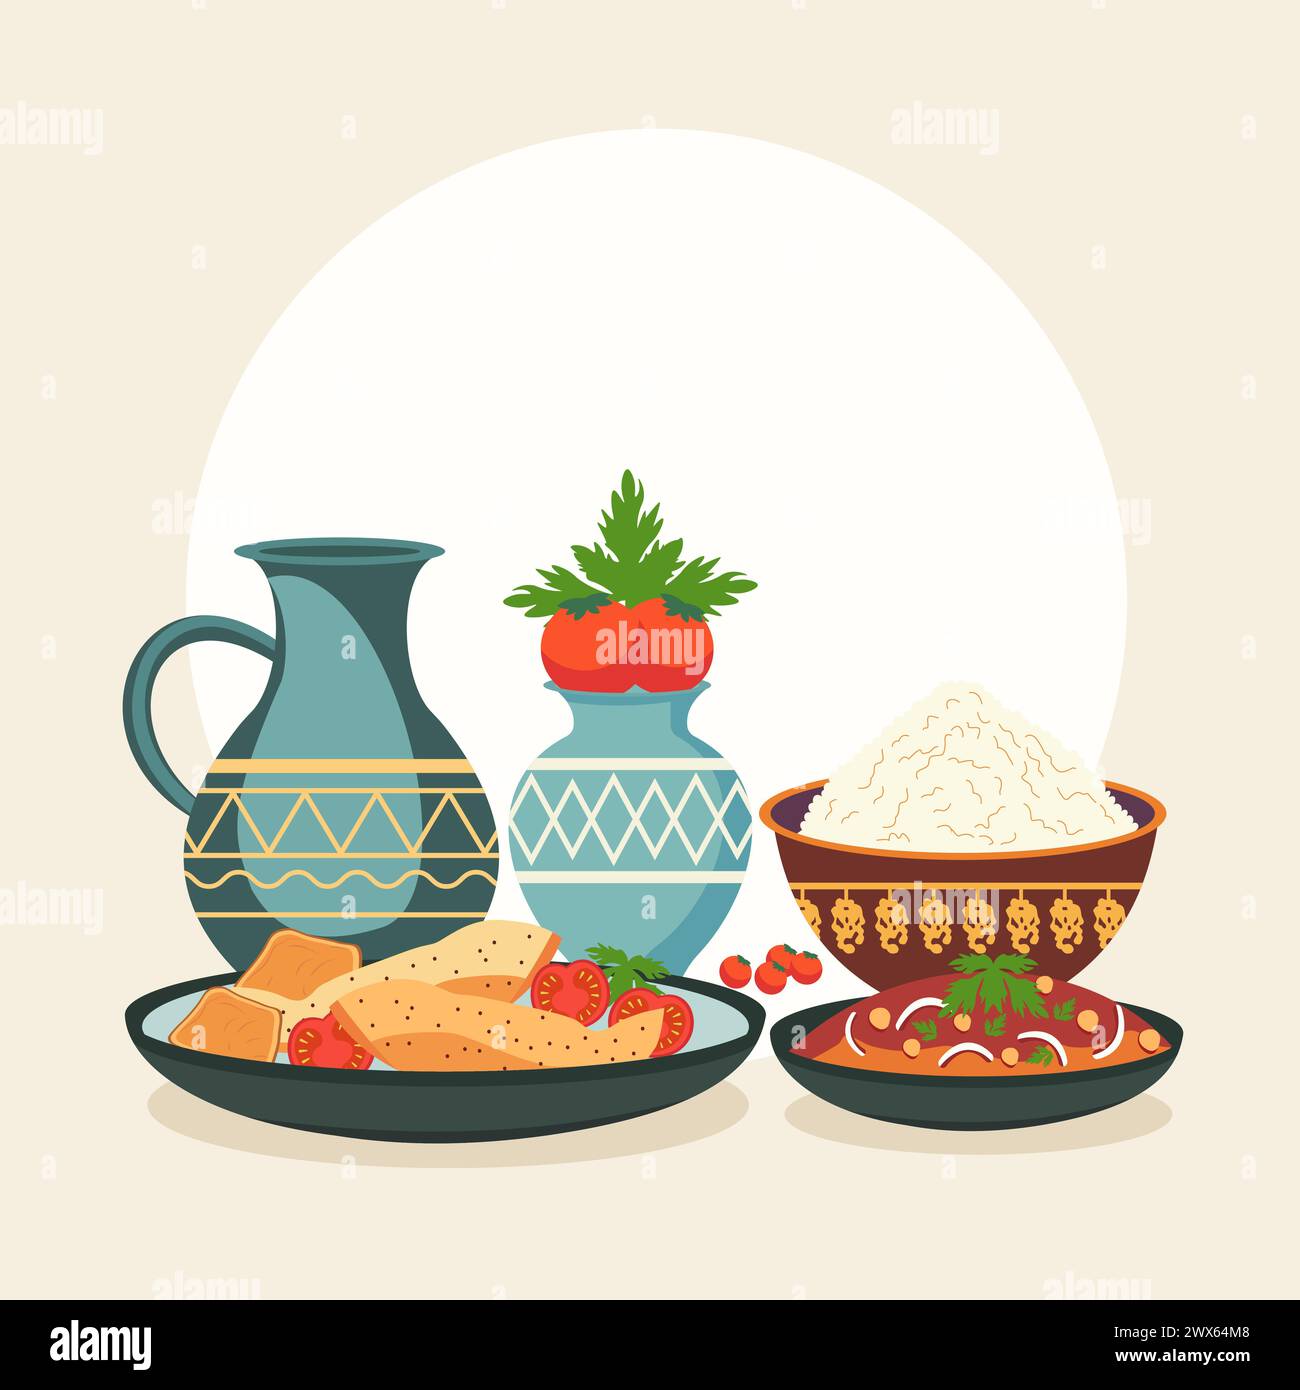 Flat Design of Vegetable Food Dishes with Vase Bowl for Nowruz Celebration Stock Vector